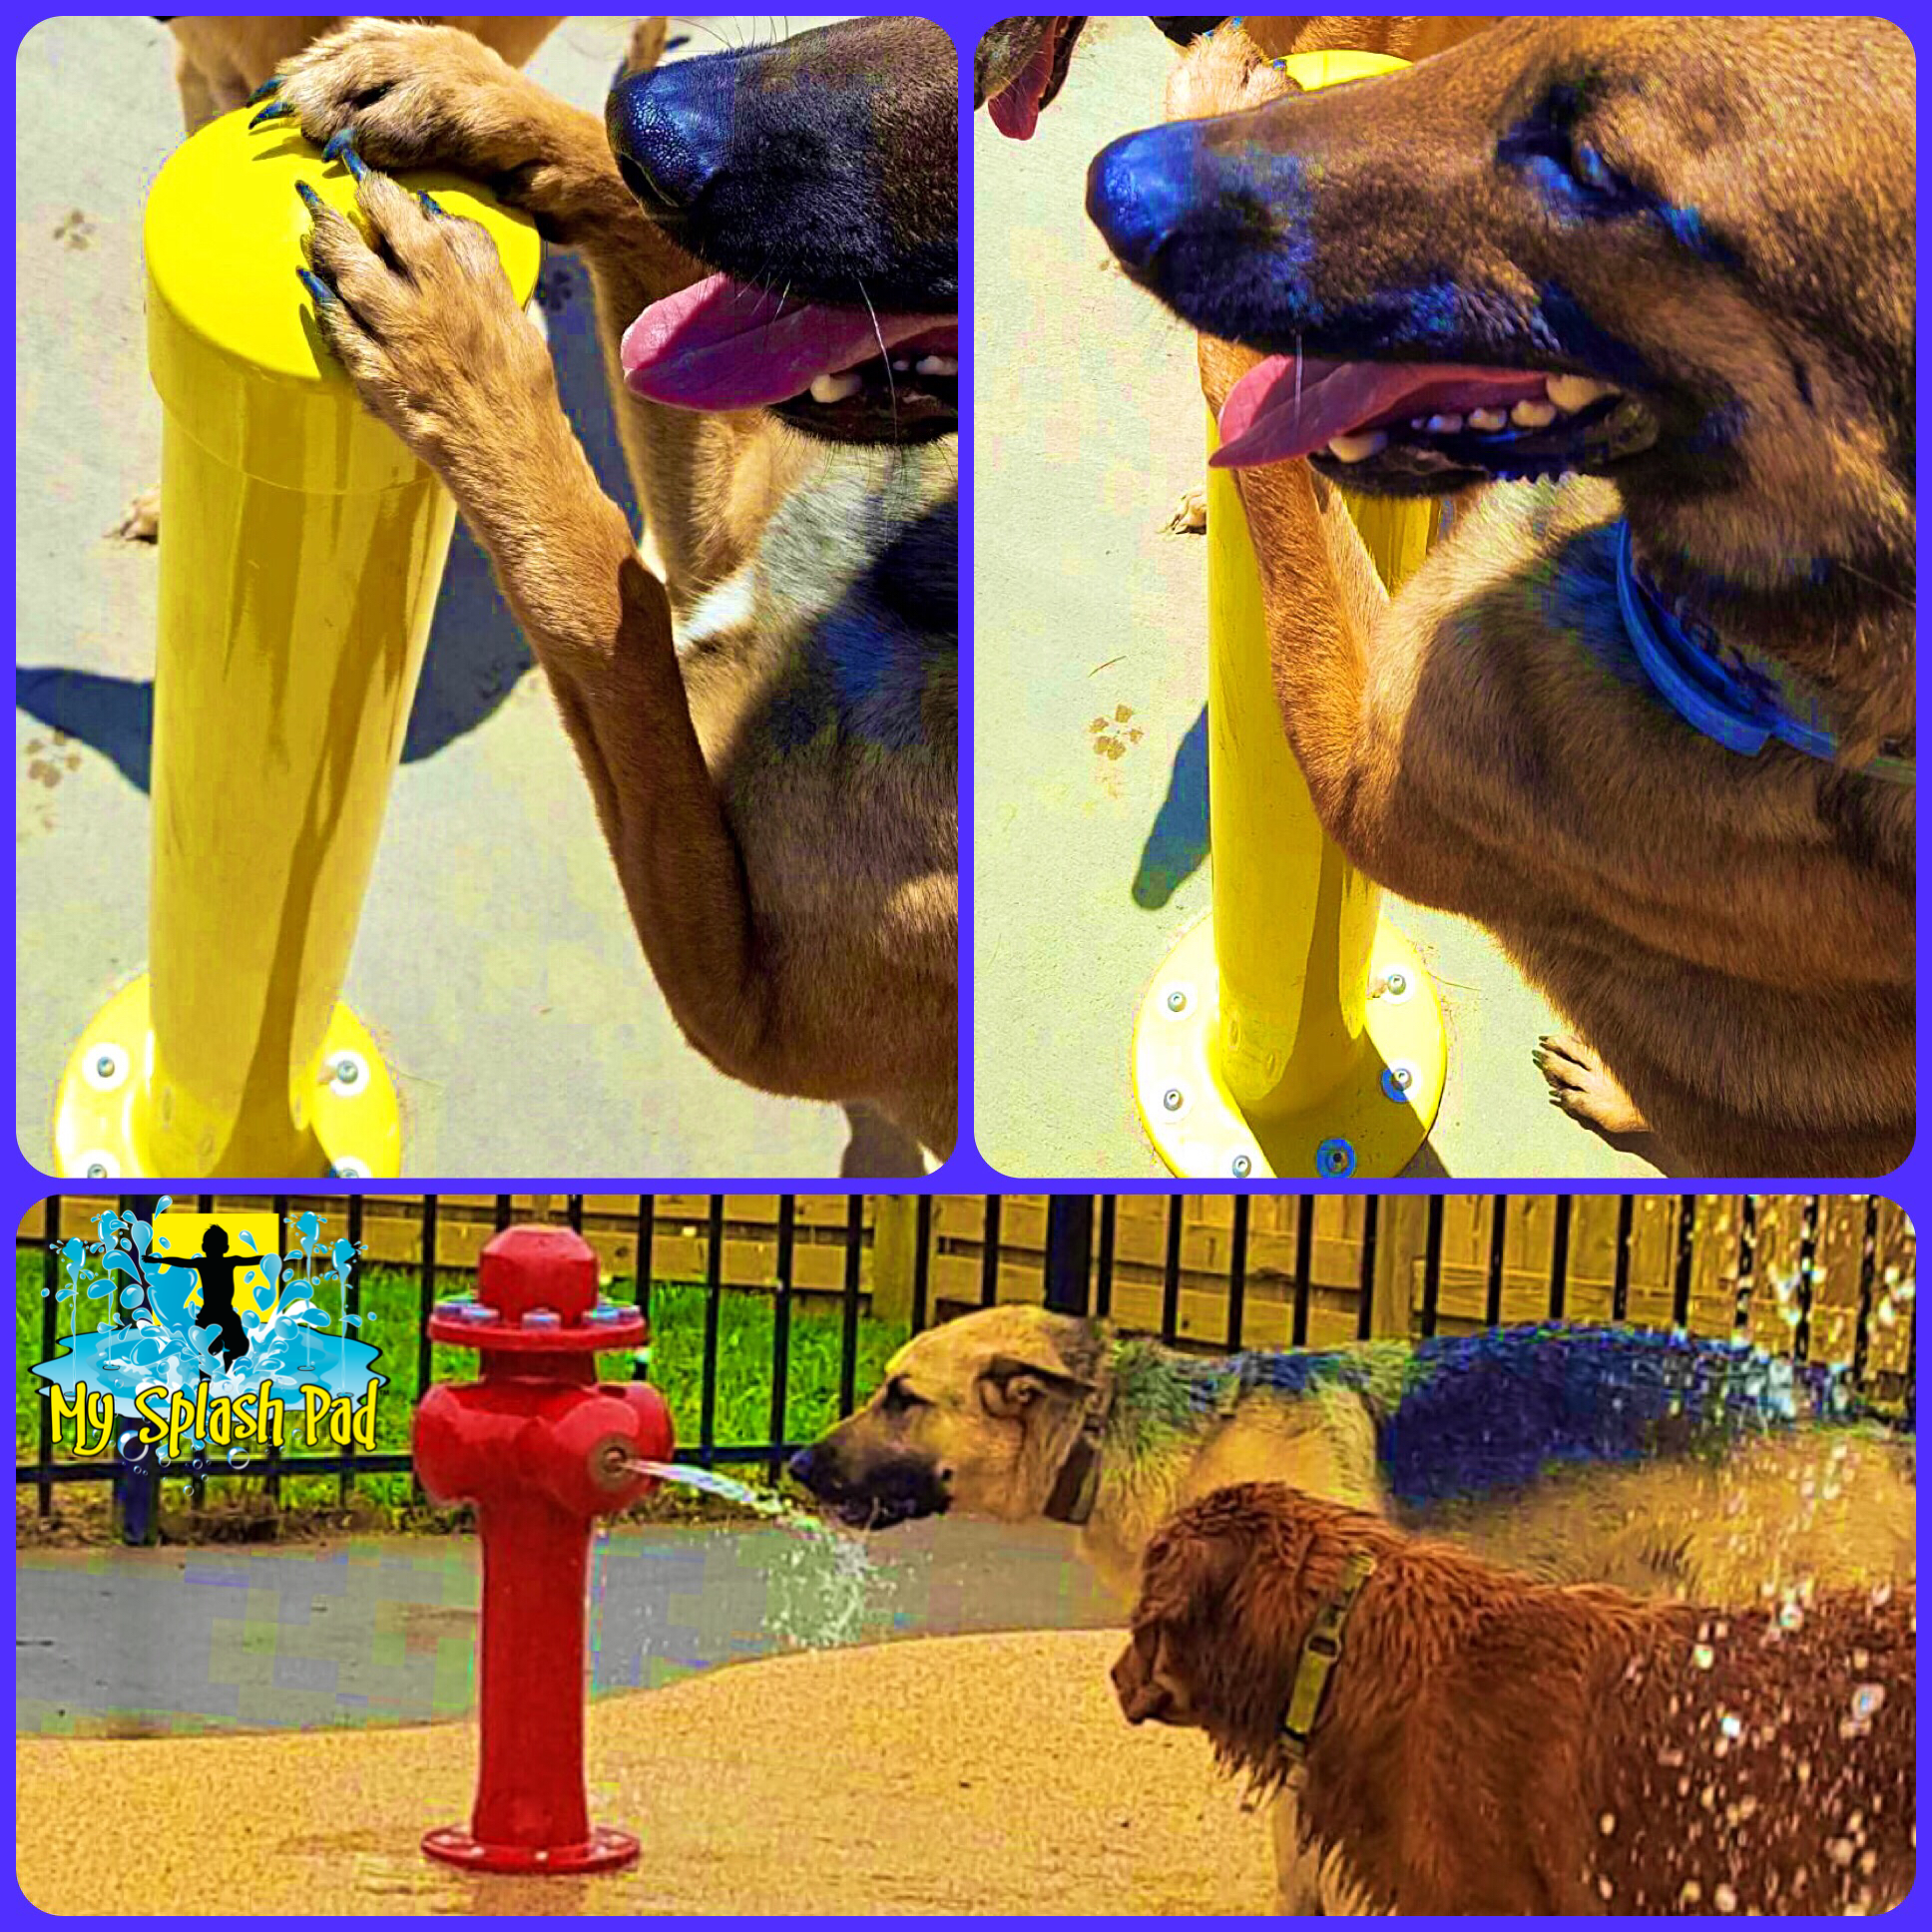 My Splash Pad Dog Water Park Toy Features. Manufacturer, Installer And Builder Of Dog Water Park Splashpad Equipment.